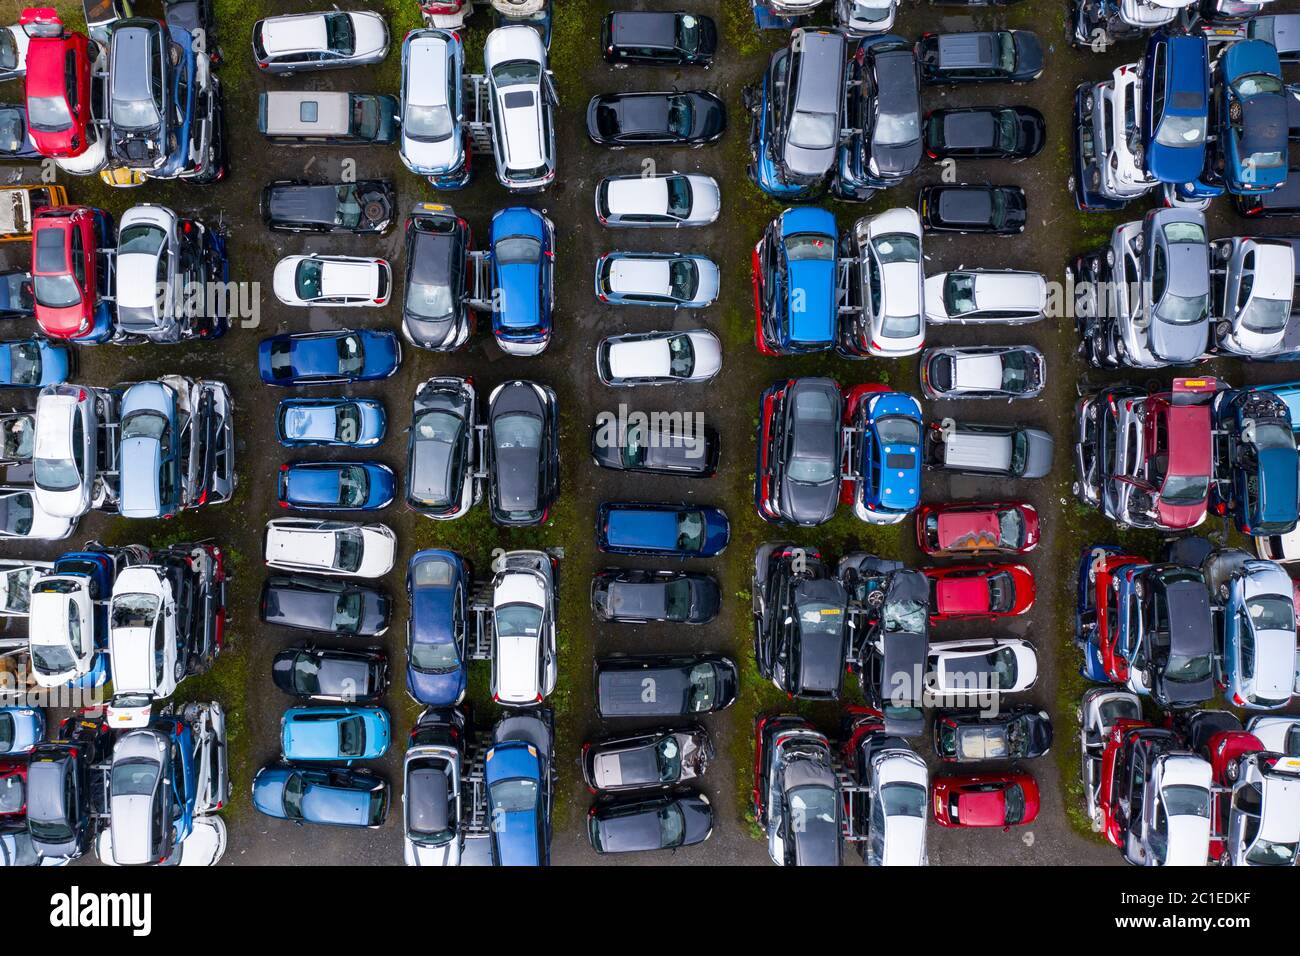 Vista aérea de muchos coches almacenados en un astillero de desguace de coches o desguace de chatarra en Escocia, Reino Unido. Foto de stock